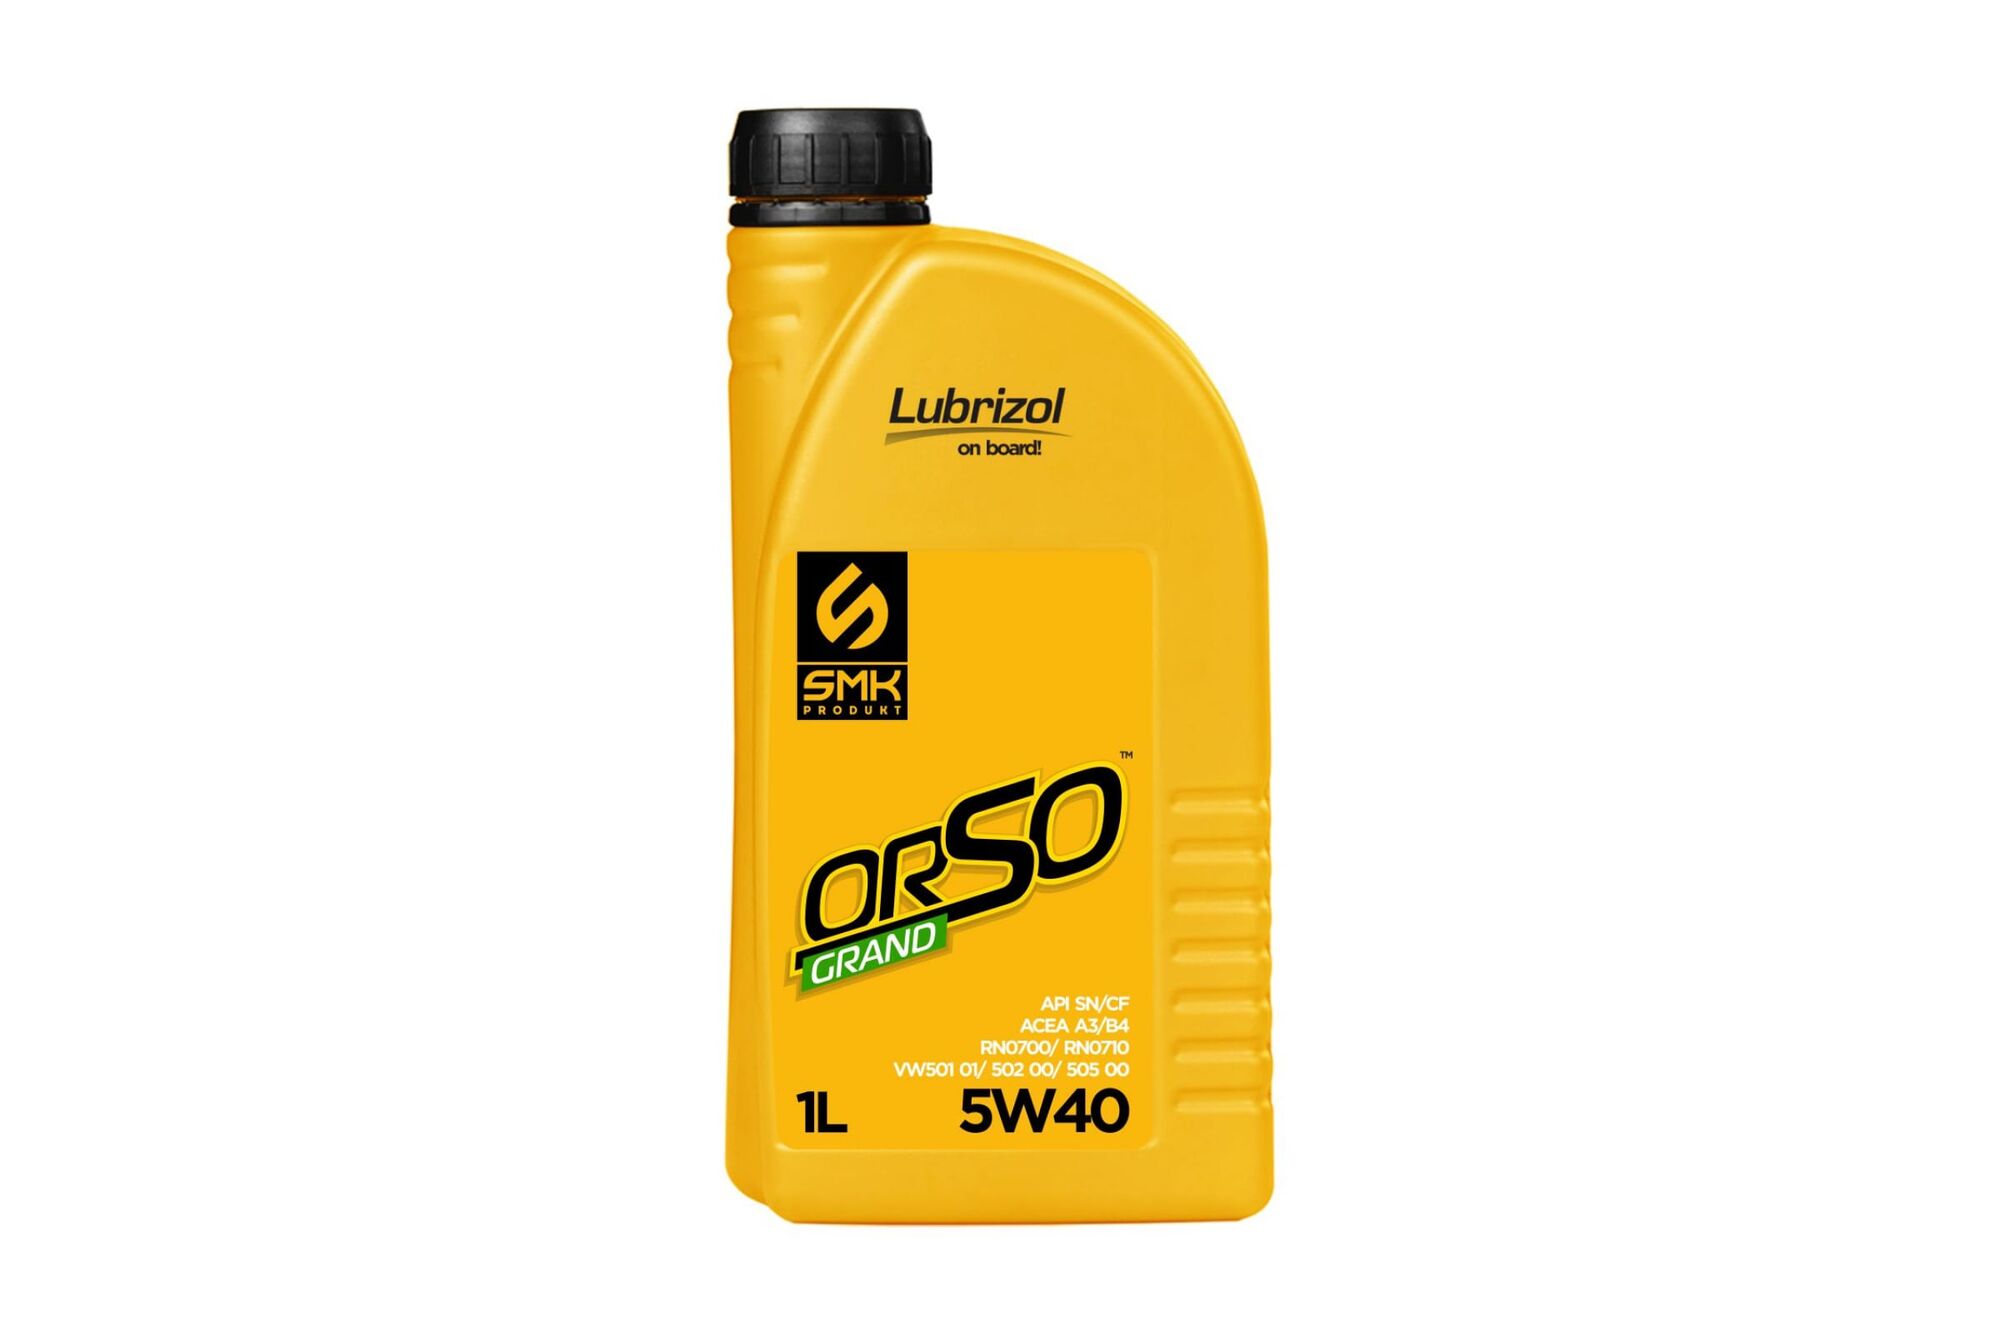 Универсальное моторное масло SMK Orso Grand 540 5W-40 API SN/CF 540ORGR001